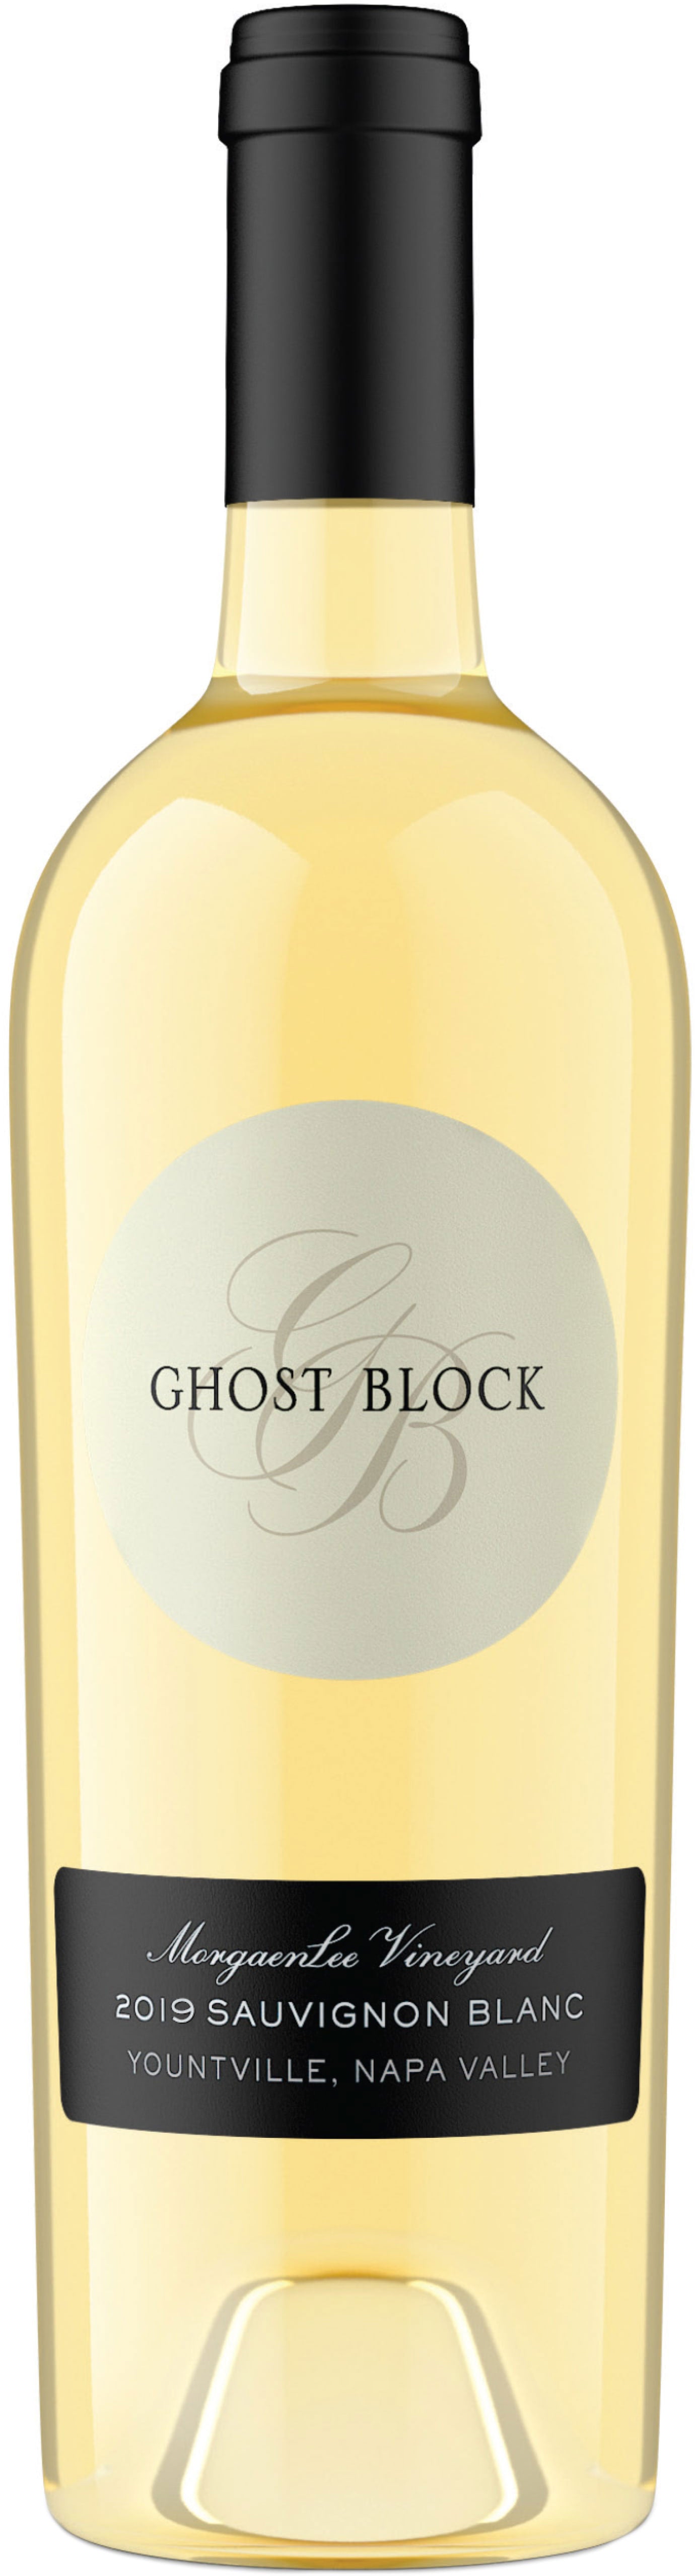 Ghost Block Sauvignon Blanc Morganlee Vineyard 2019